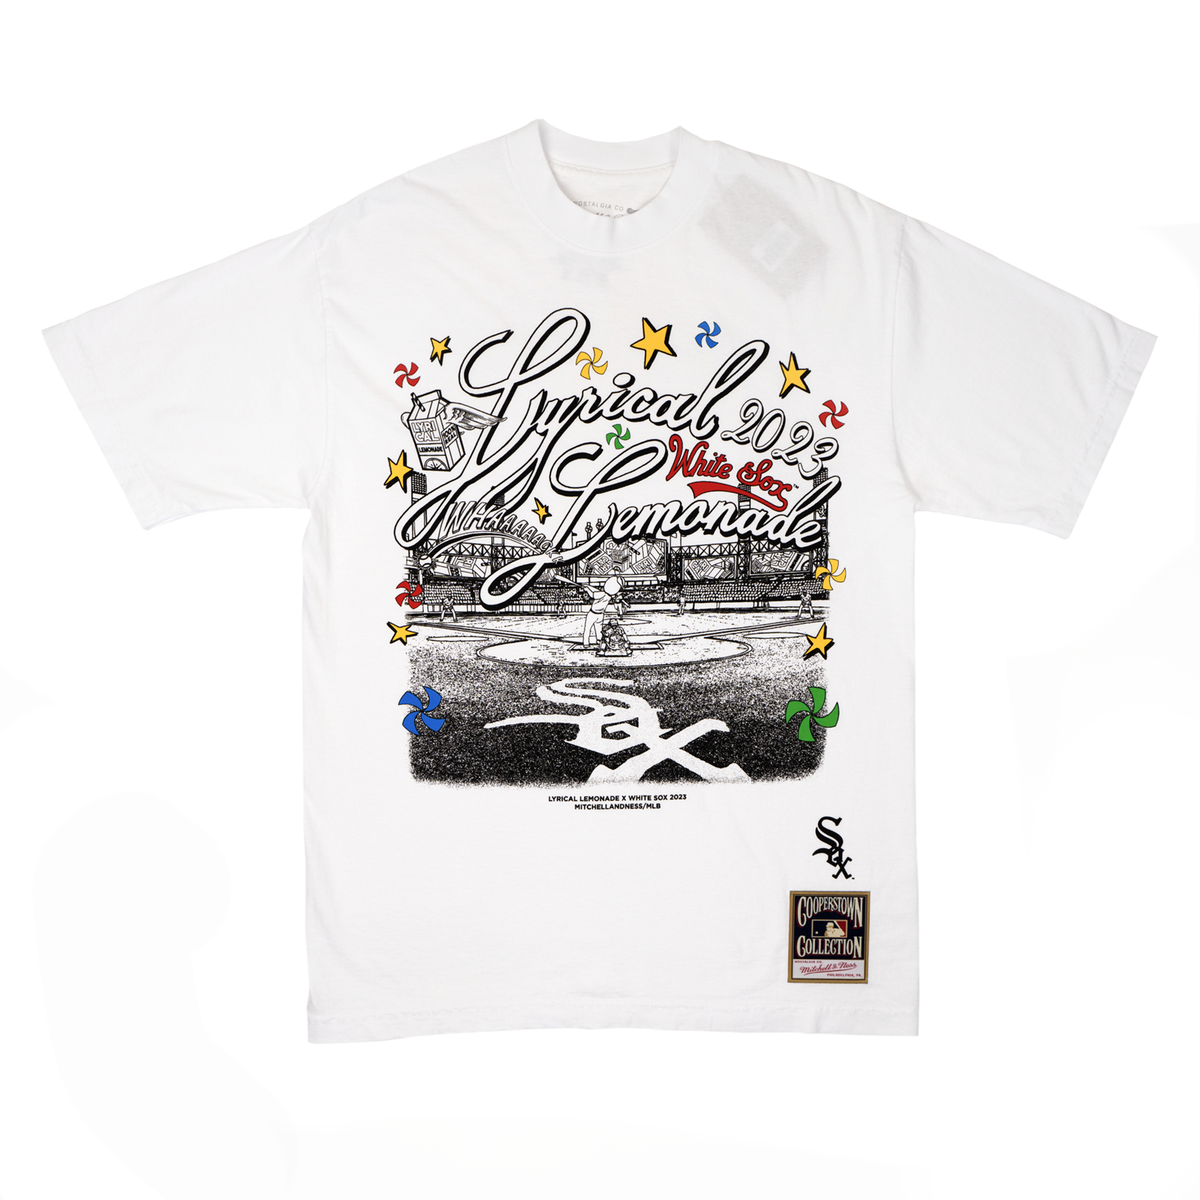 Lyrical Lemonade x White Sox T-Shirt 🍋🔜 Merchandise will be